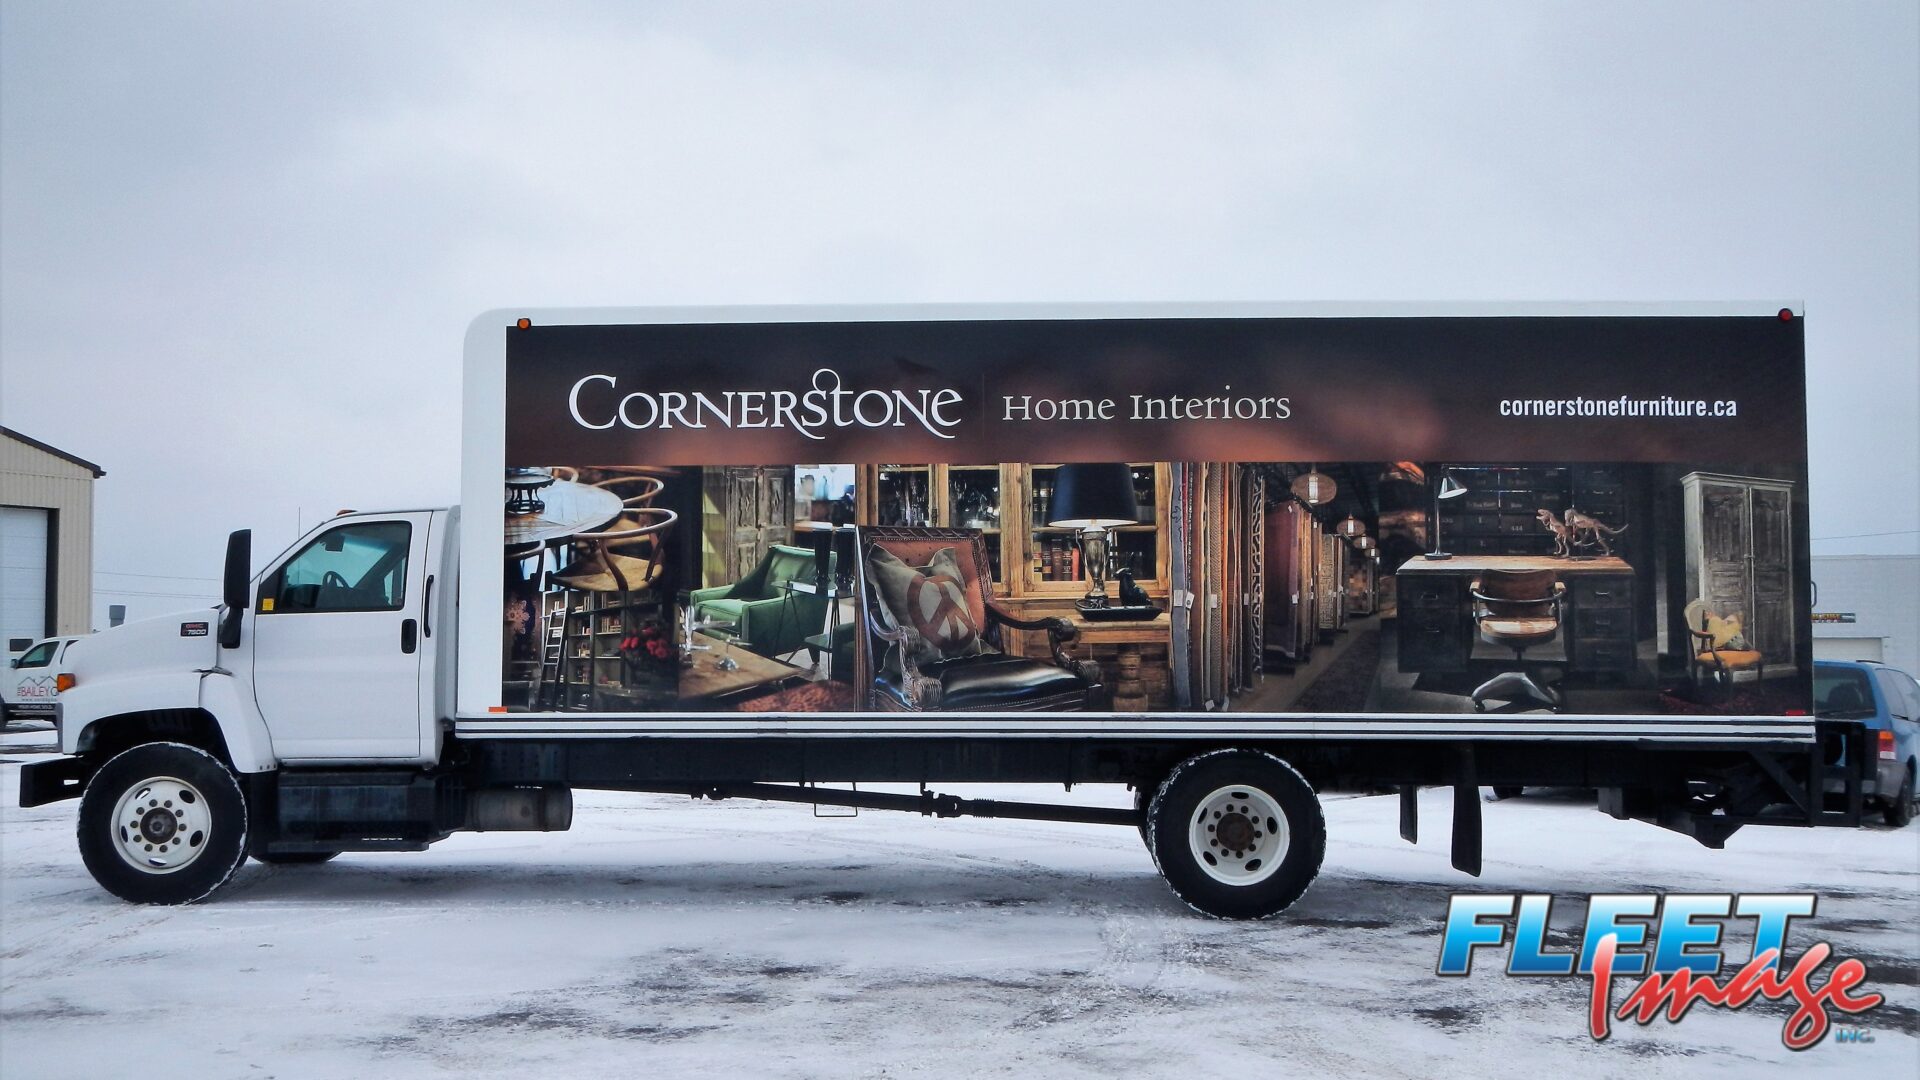 CORNERSTONE HOME INTERIORS decal sticker on a truck